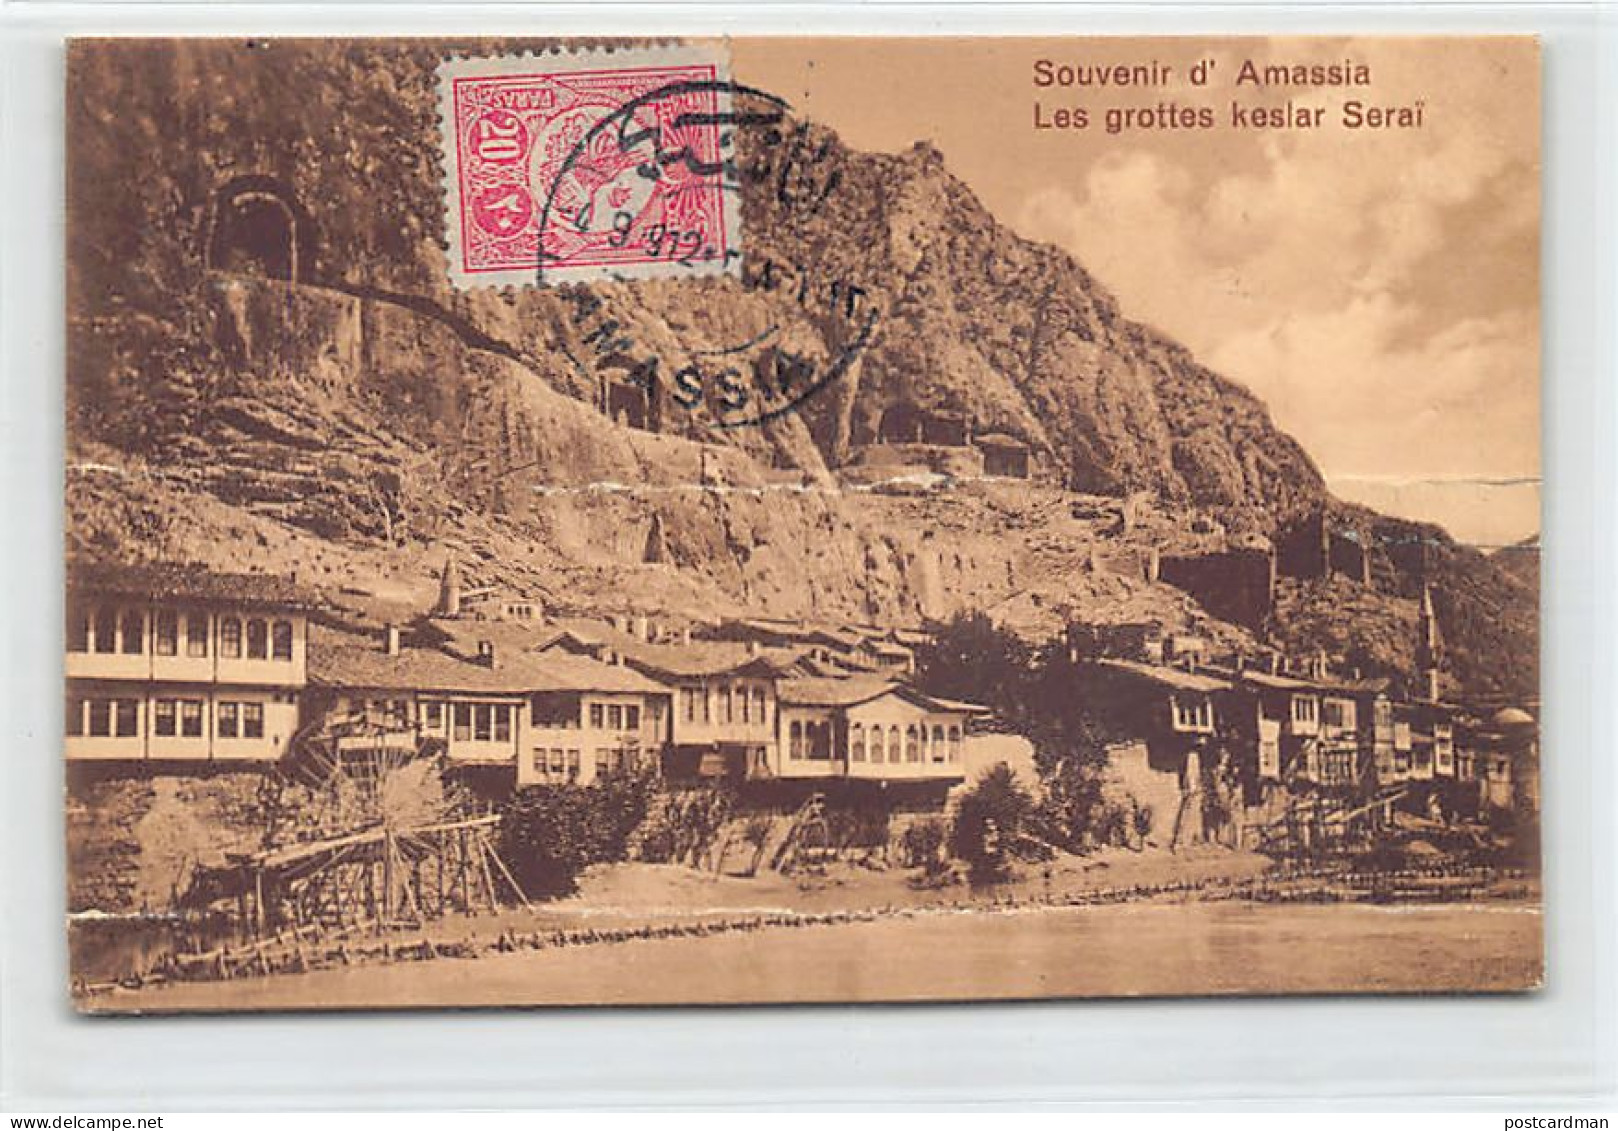 Turkey - AMASYA Amassia - Keslar Seraï Caves - SEE SCANS FOR CONDITION - Publ. Ardaches Querkkecekian 9 - Türkei